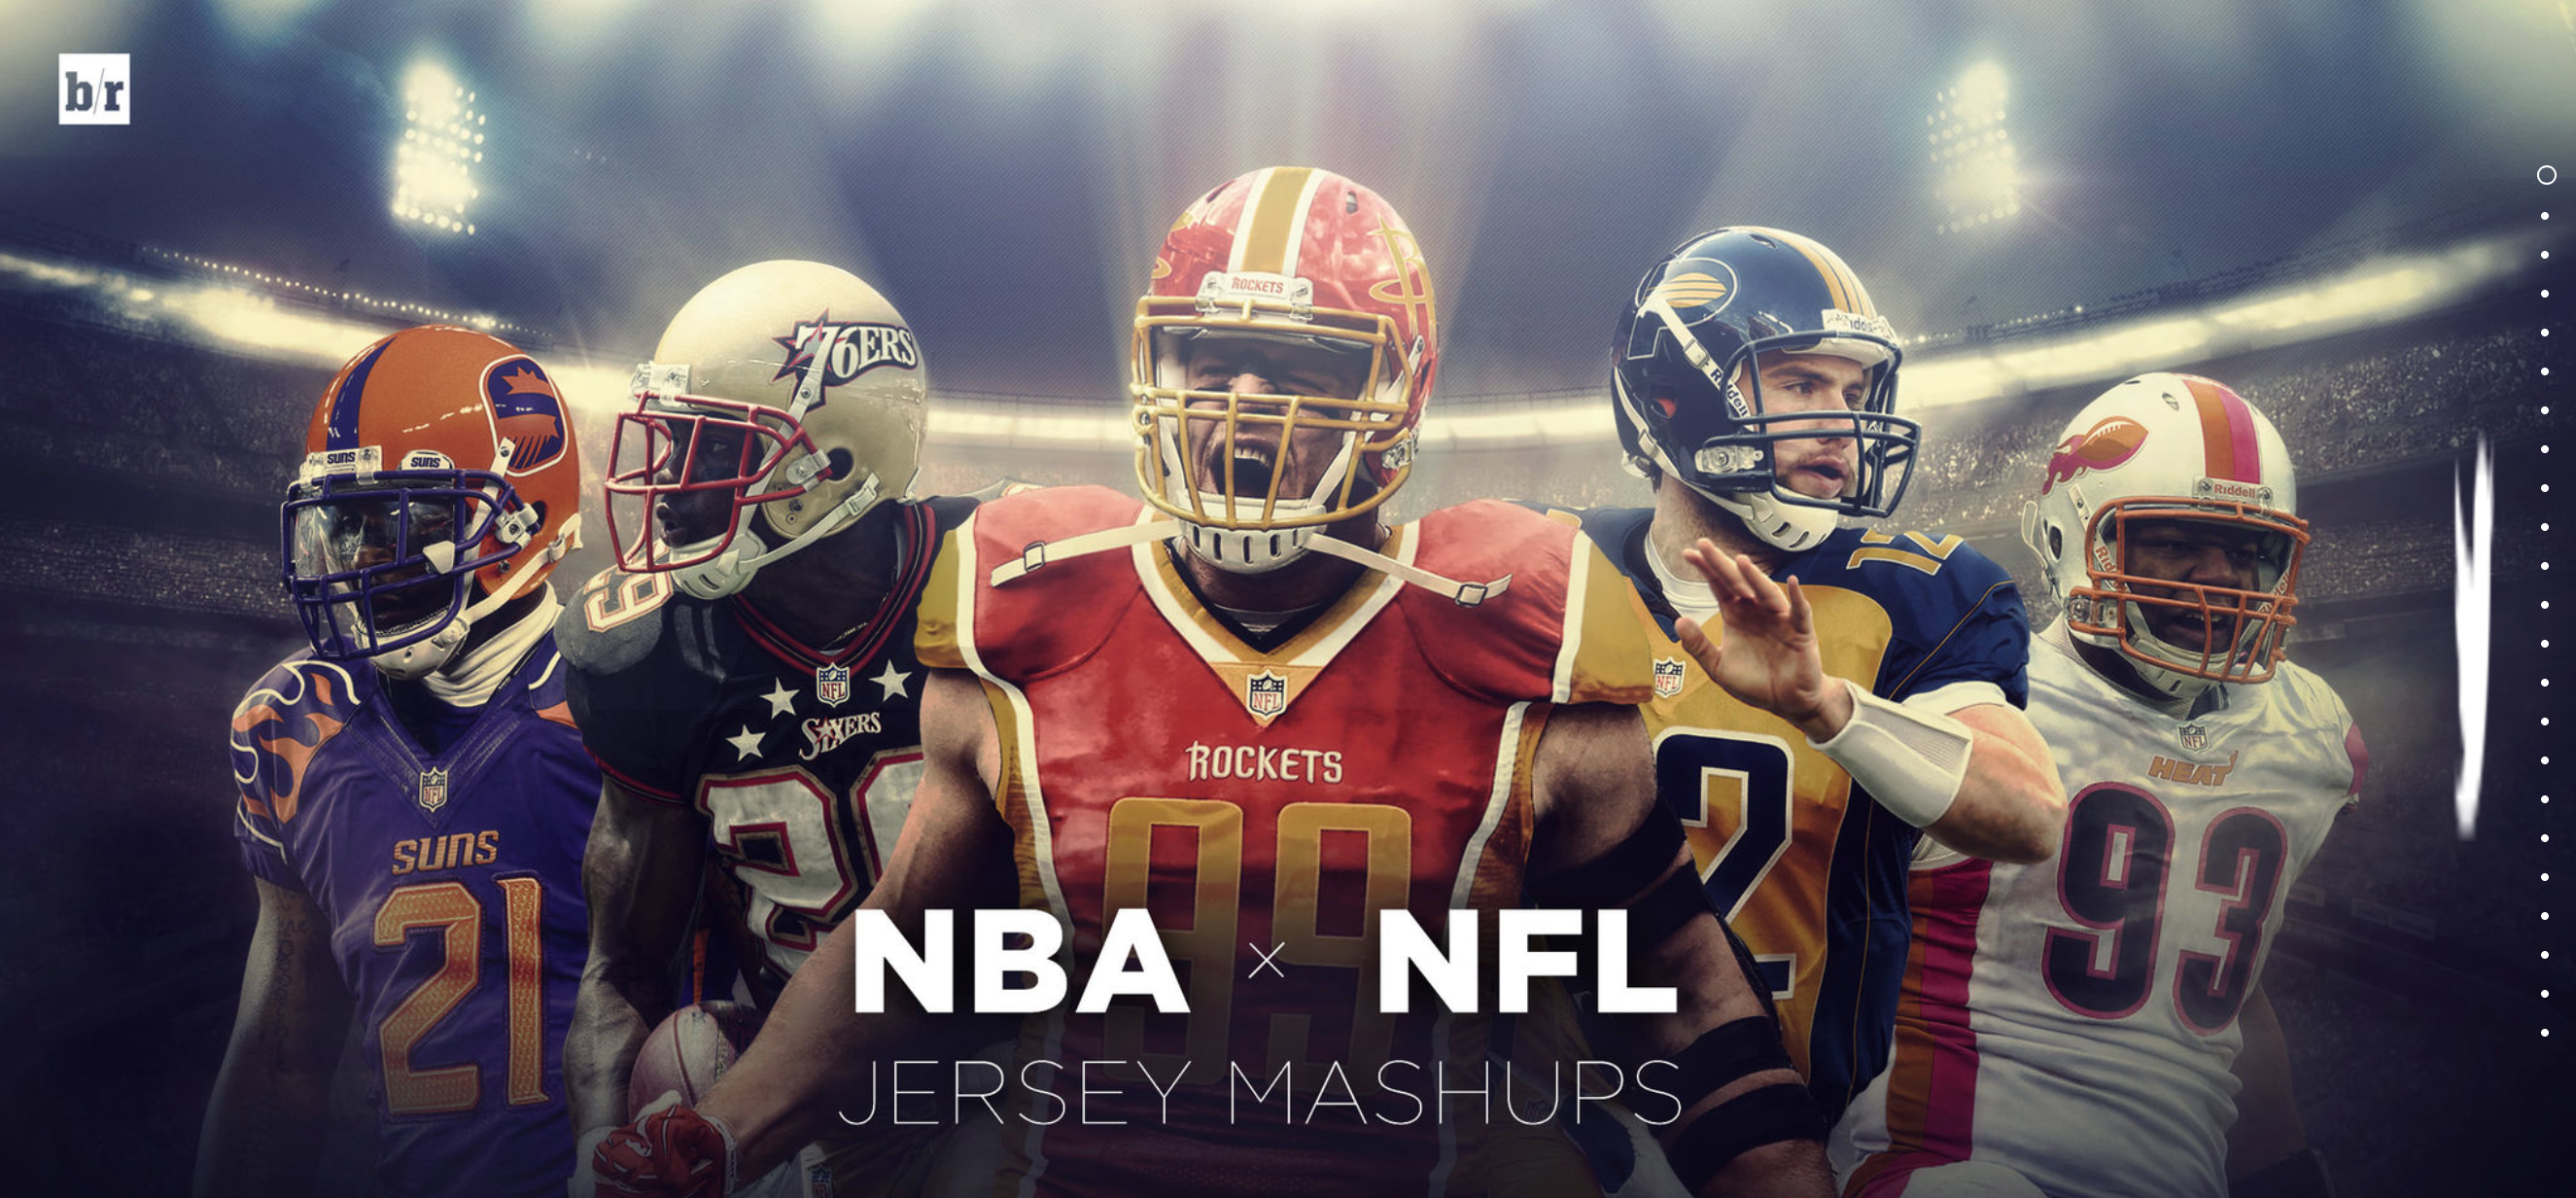 NFL X NBA Jersey Mashups - Daily Snark